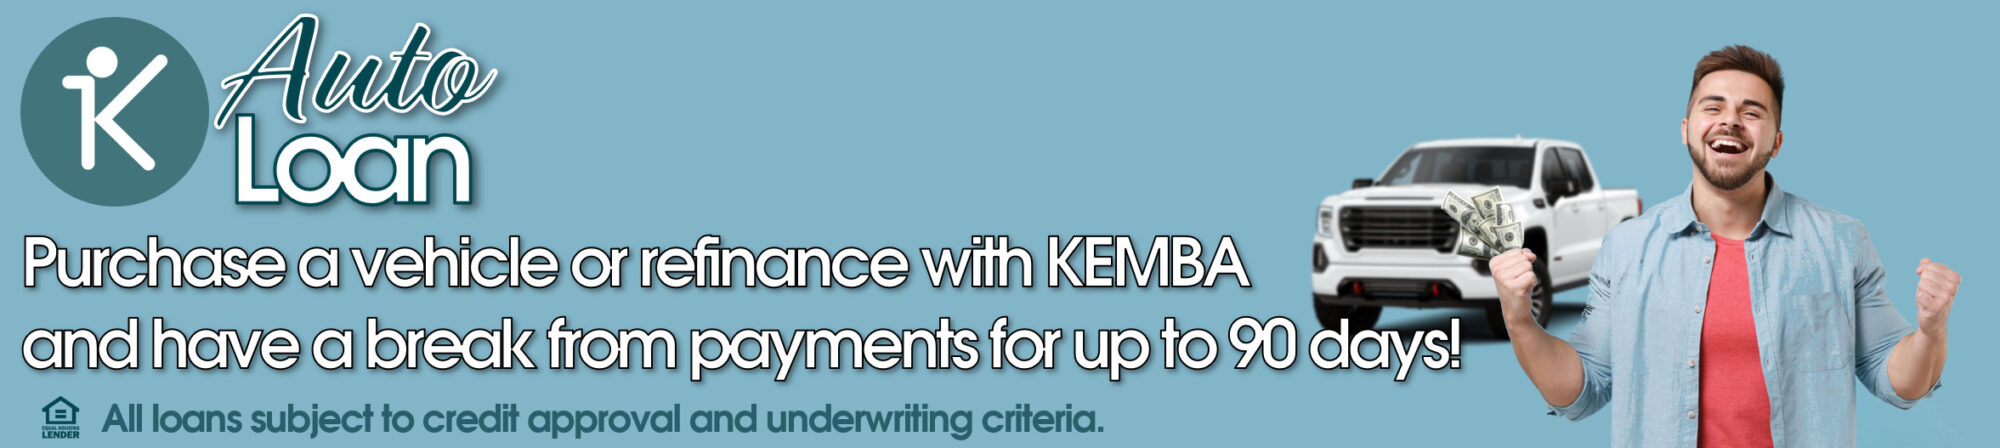 KEMBA Auto Loan